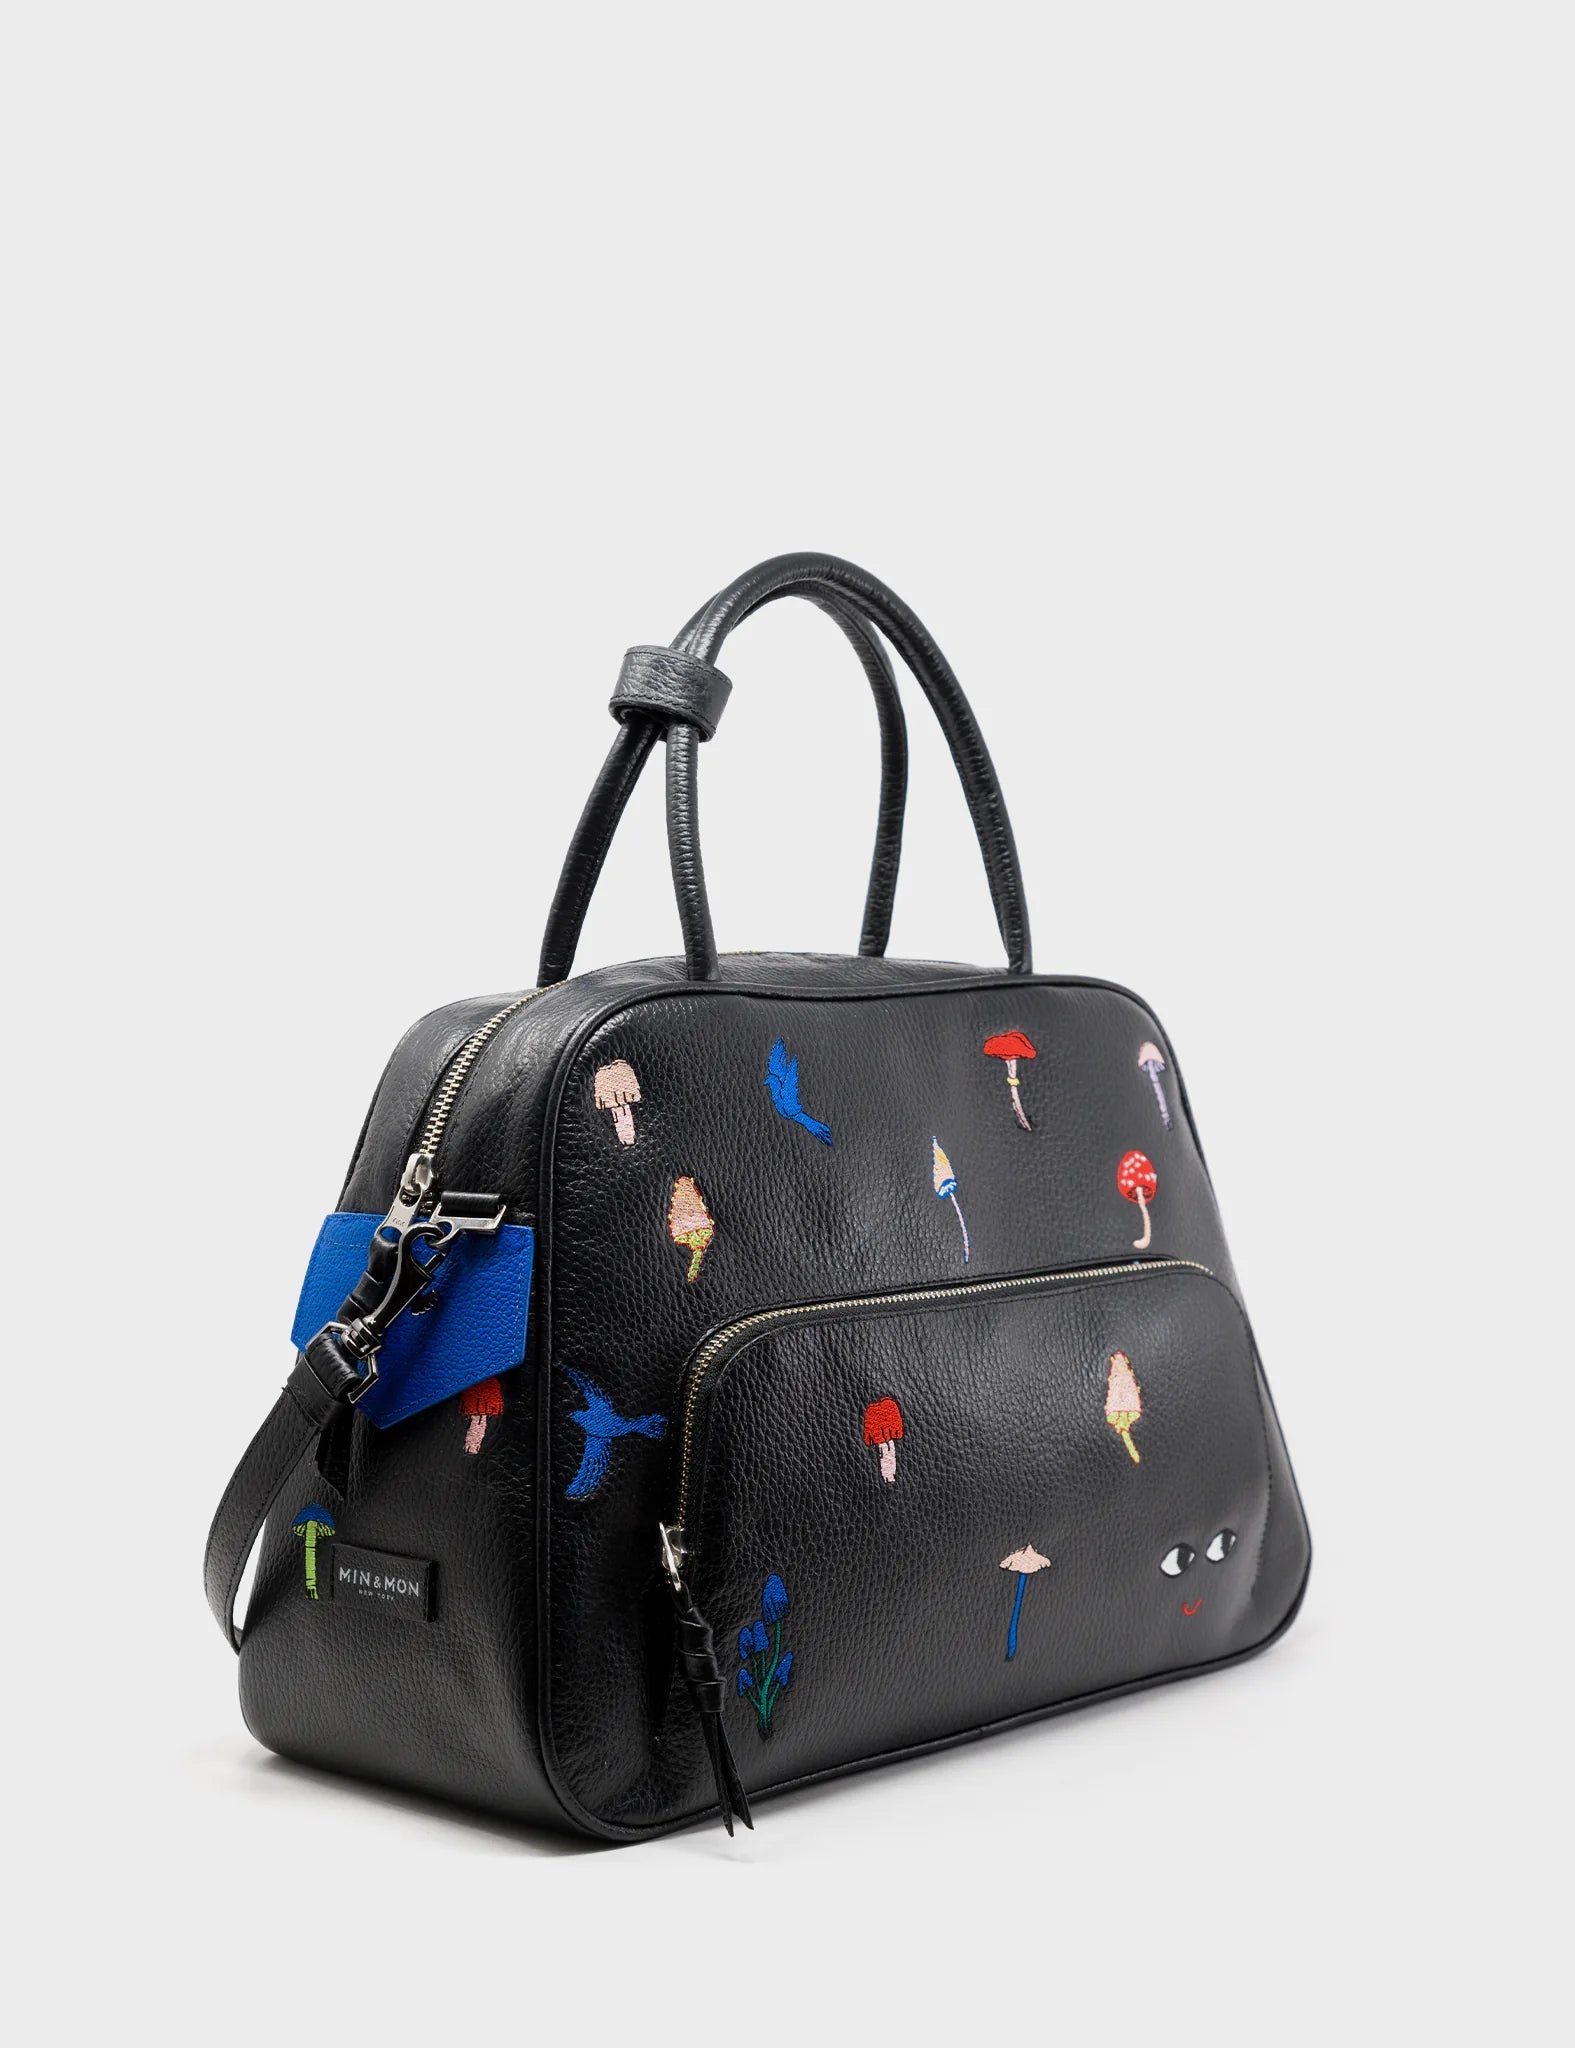 Marino Large Crossbody Black Leather Bag - Woodlands Embroidery – Min & Mon